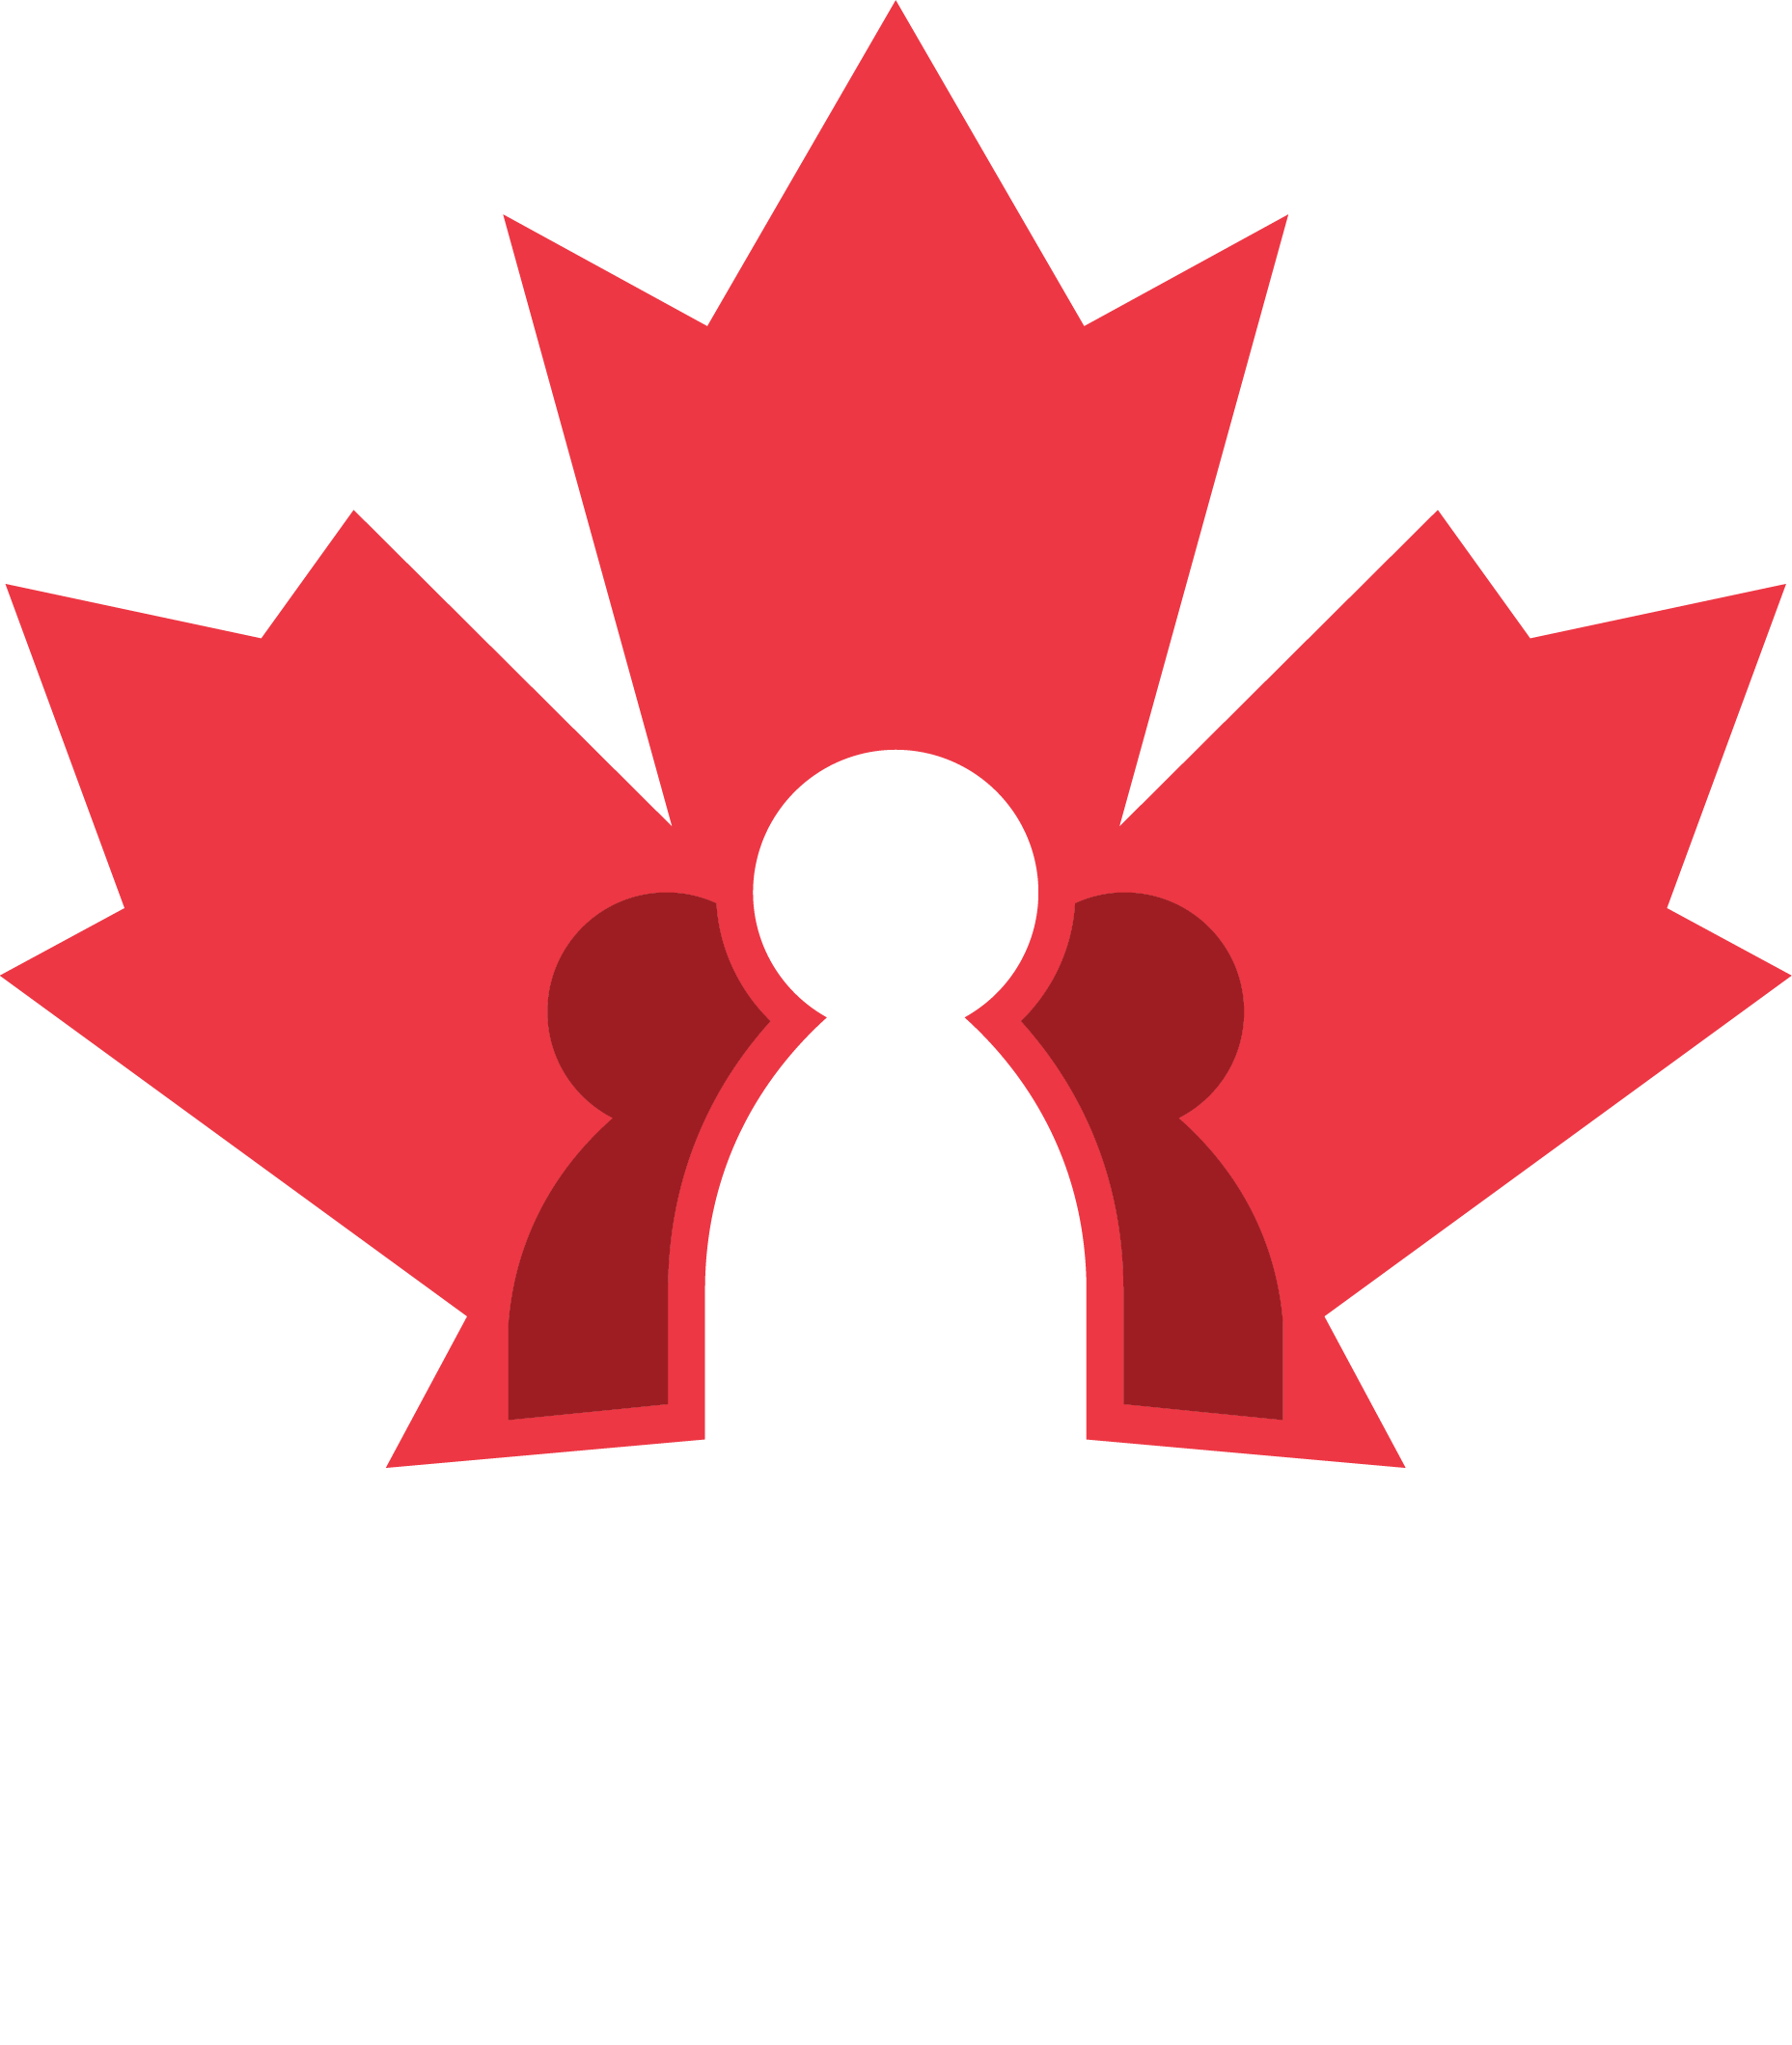 Canadian Community Alliance Network